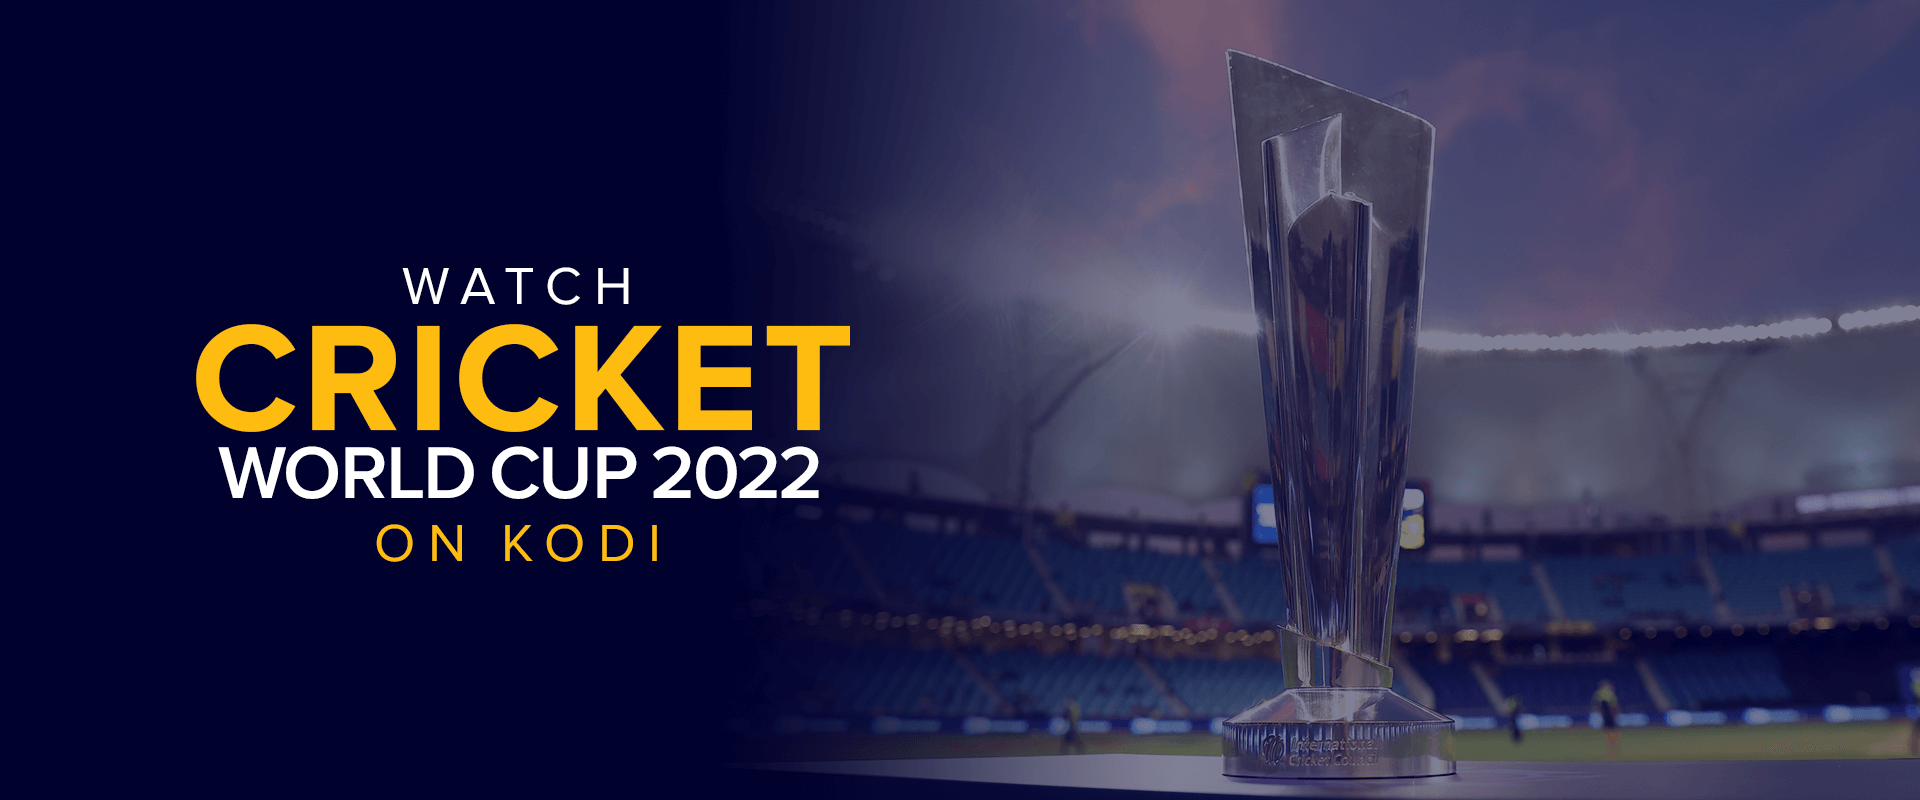 Watch Cricket World Cup 2022 on Kodi